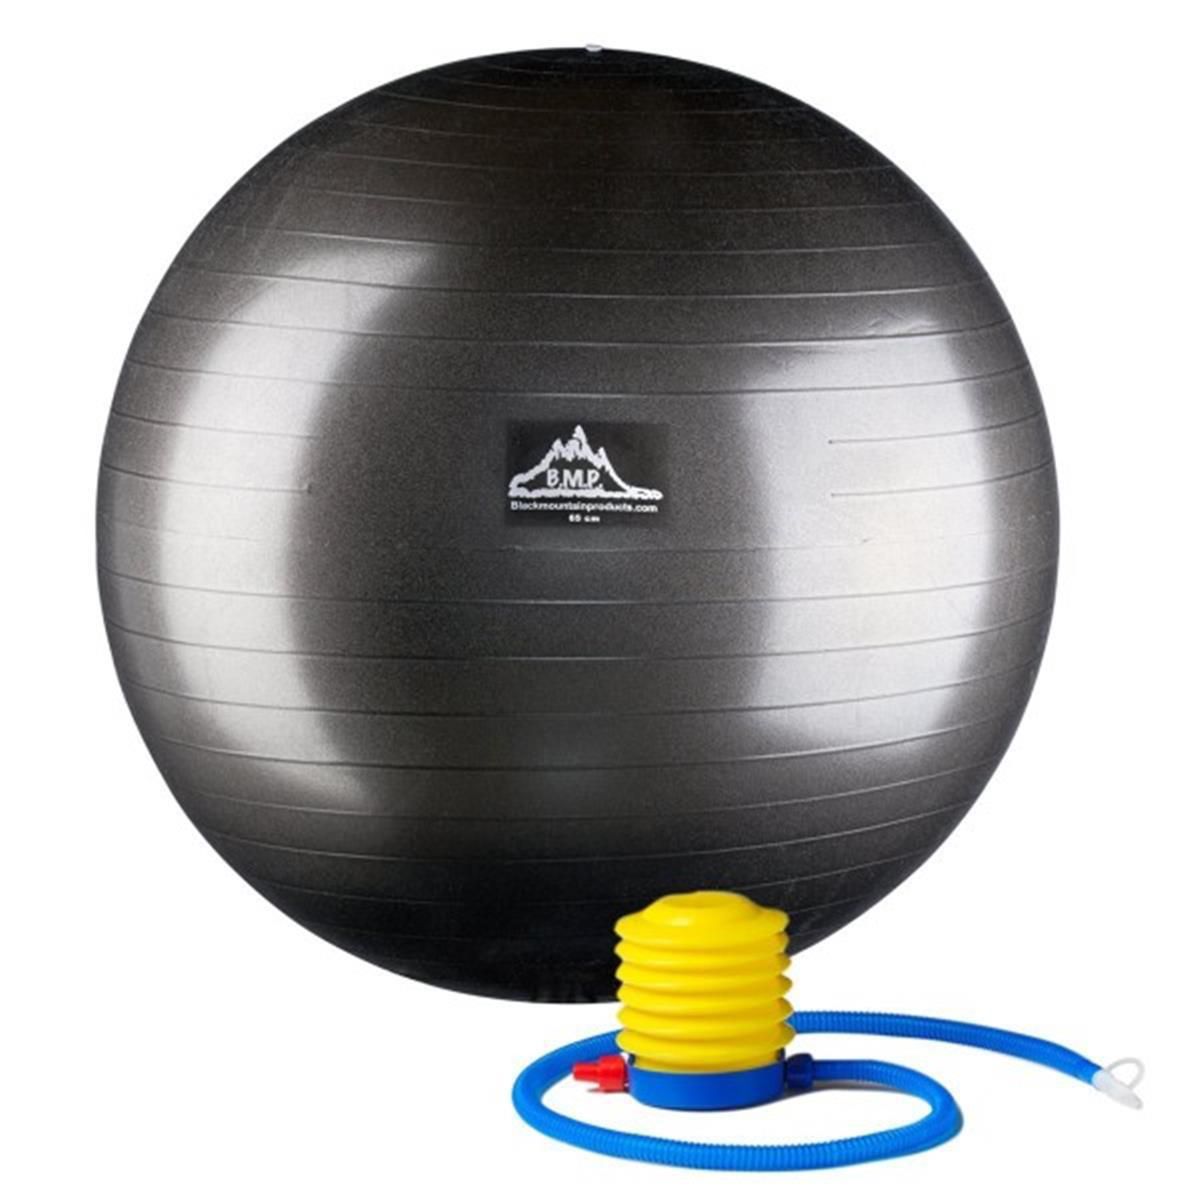 Image for HWR 75 cm. Static Strength Exercise Stability Ball Blue at Kohl's.